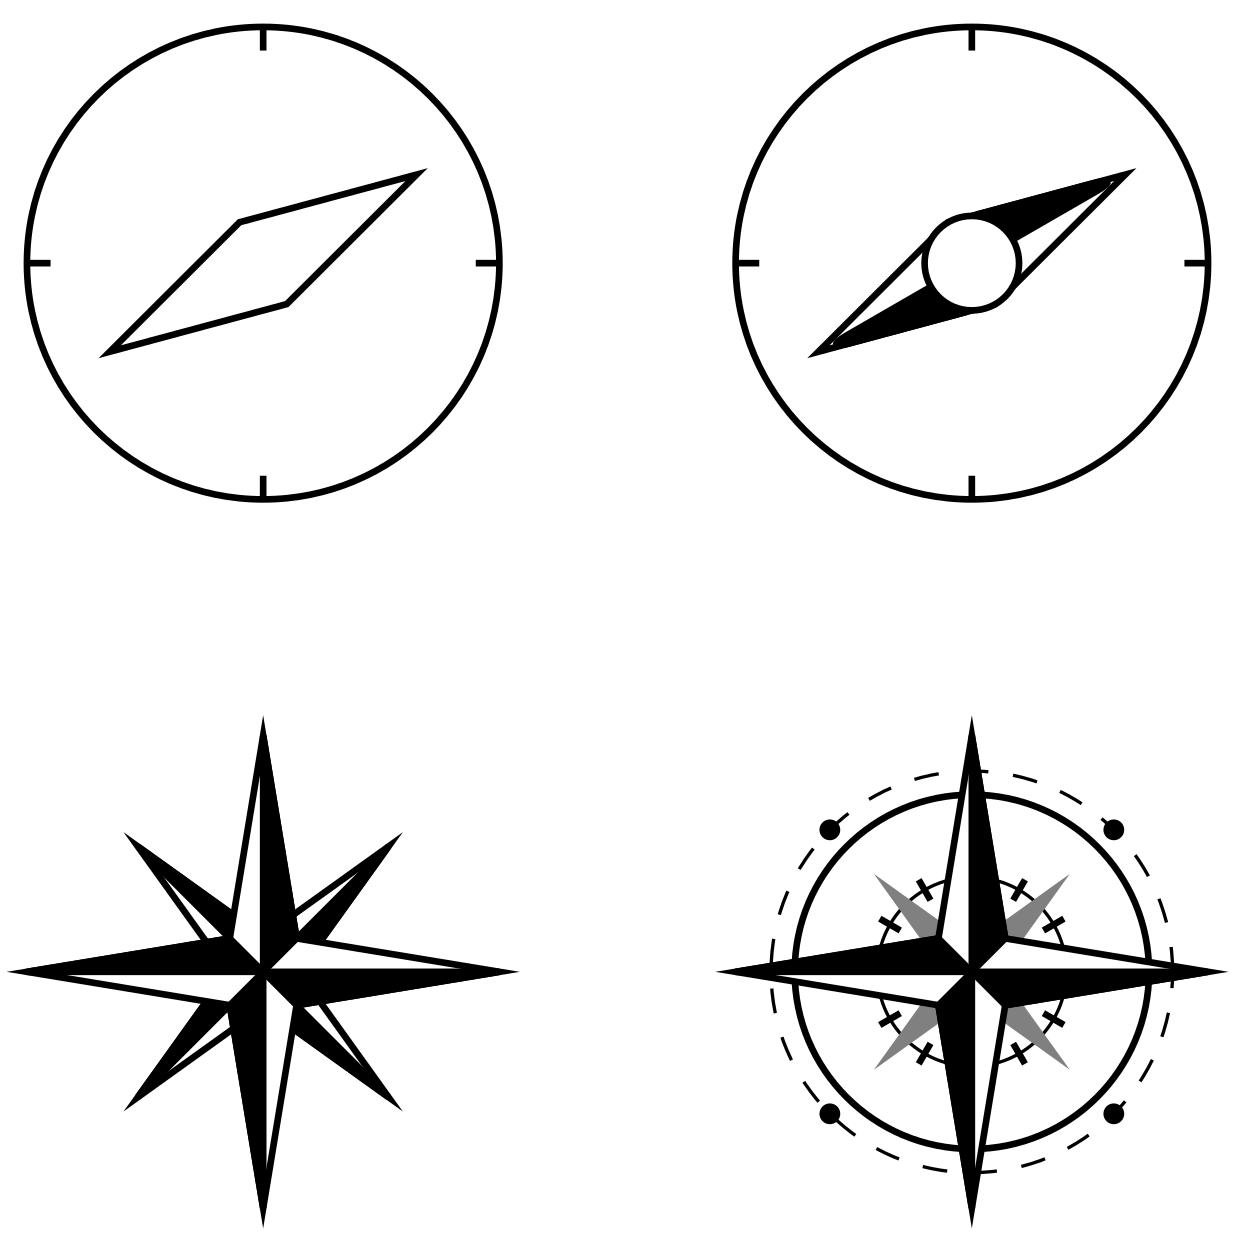 4 Compass